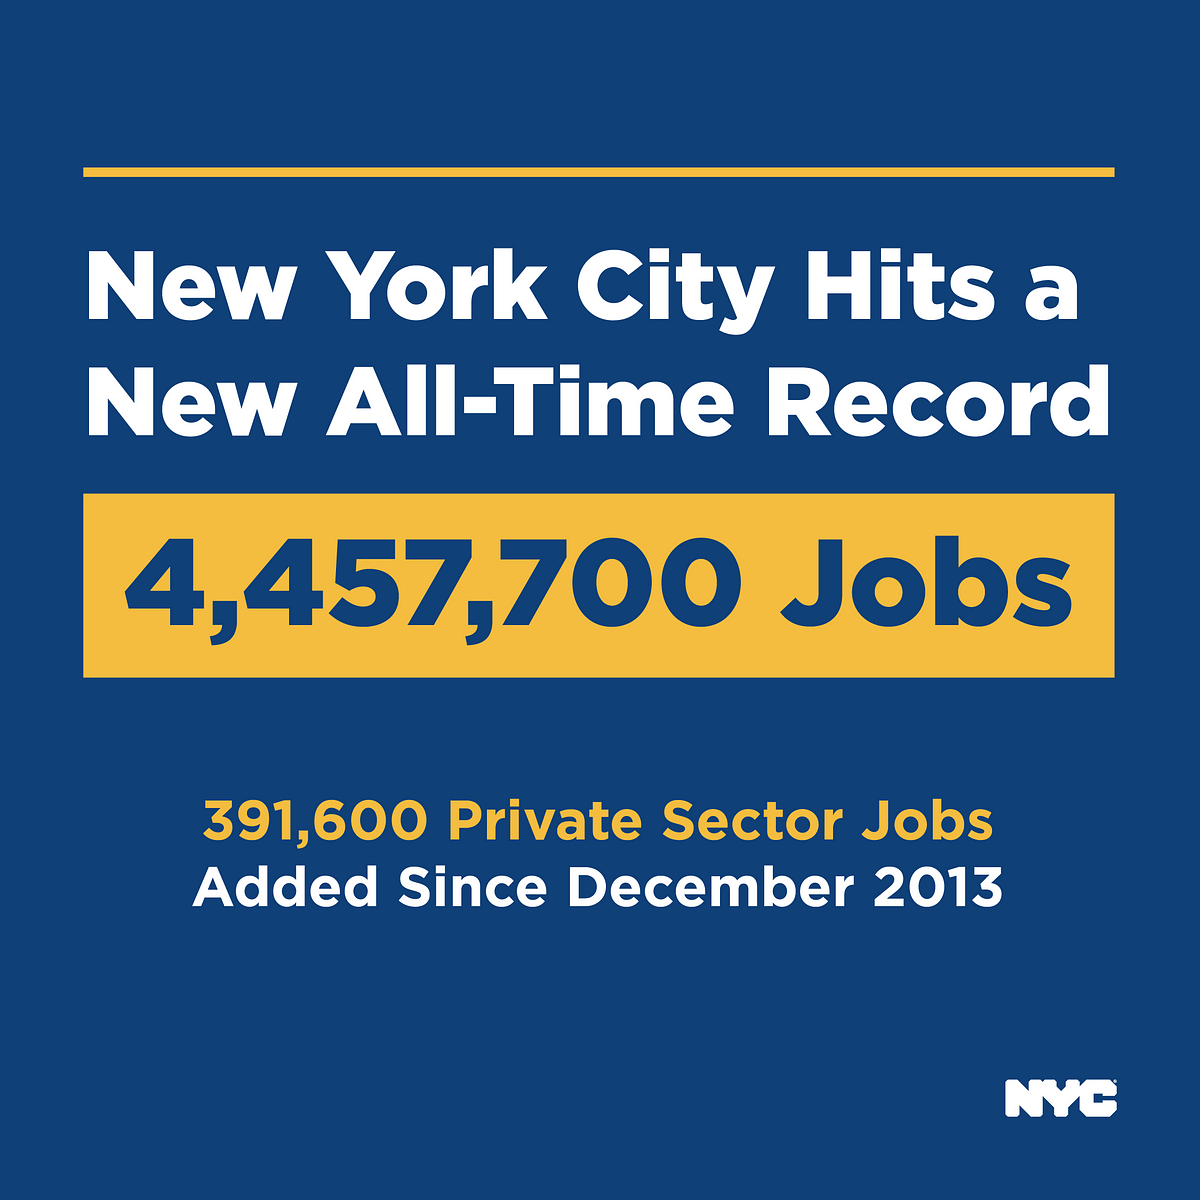 new-york-city-reaches-an-all-time-jobs-high-by-nyc-mayor-s-office-medium